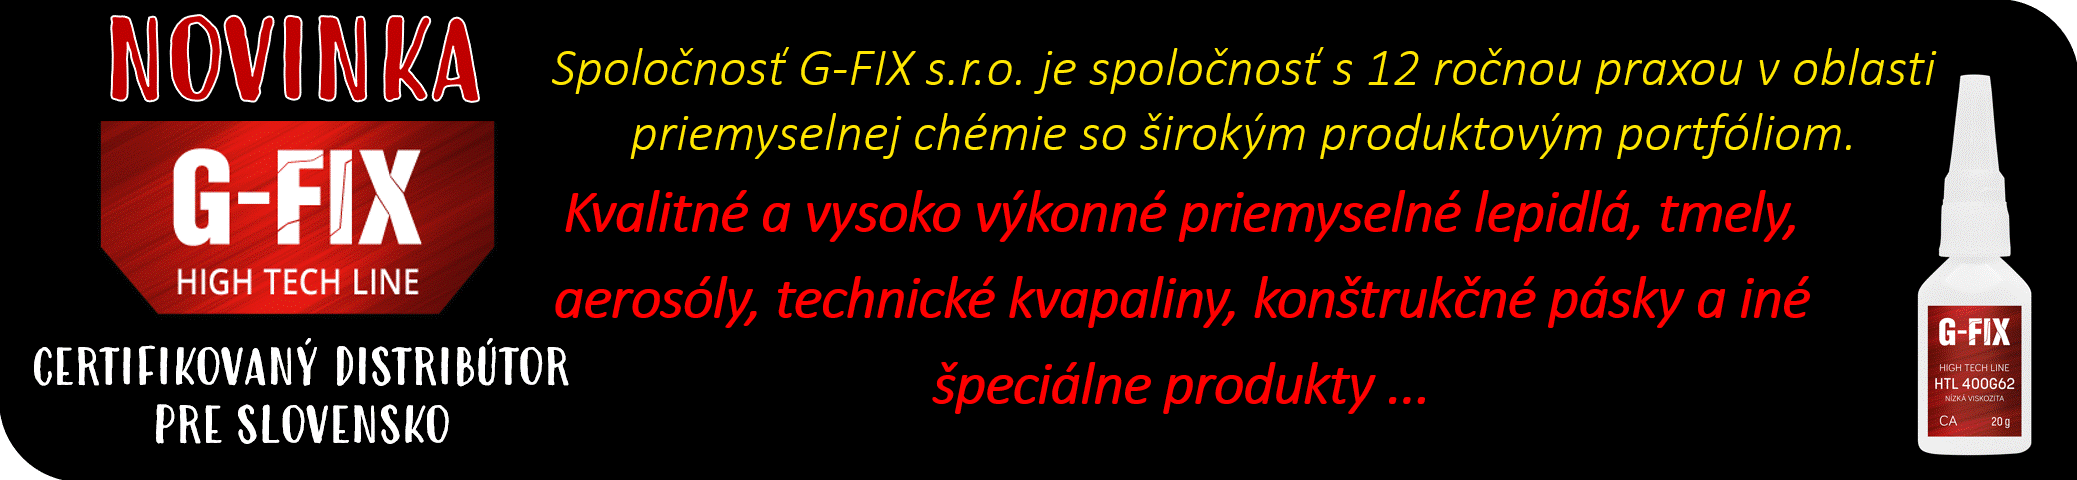 Priemyselná chémia G-FIX 